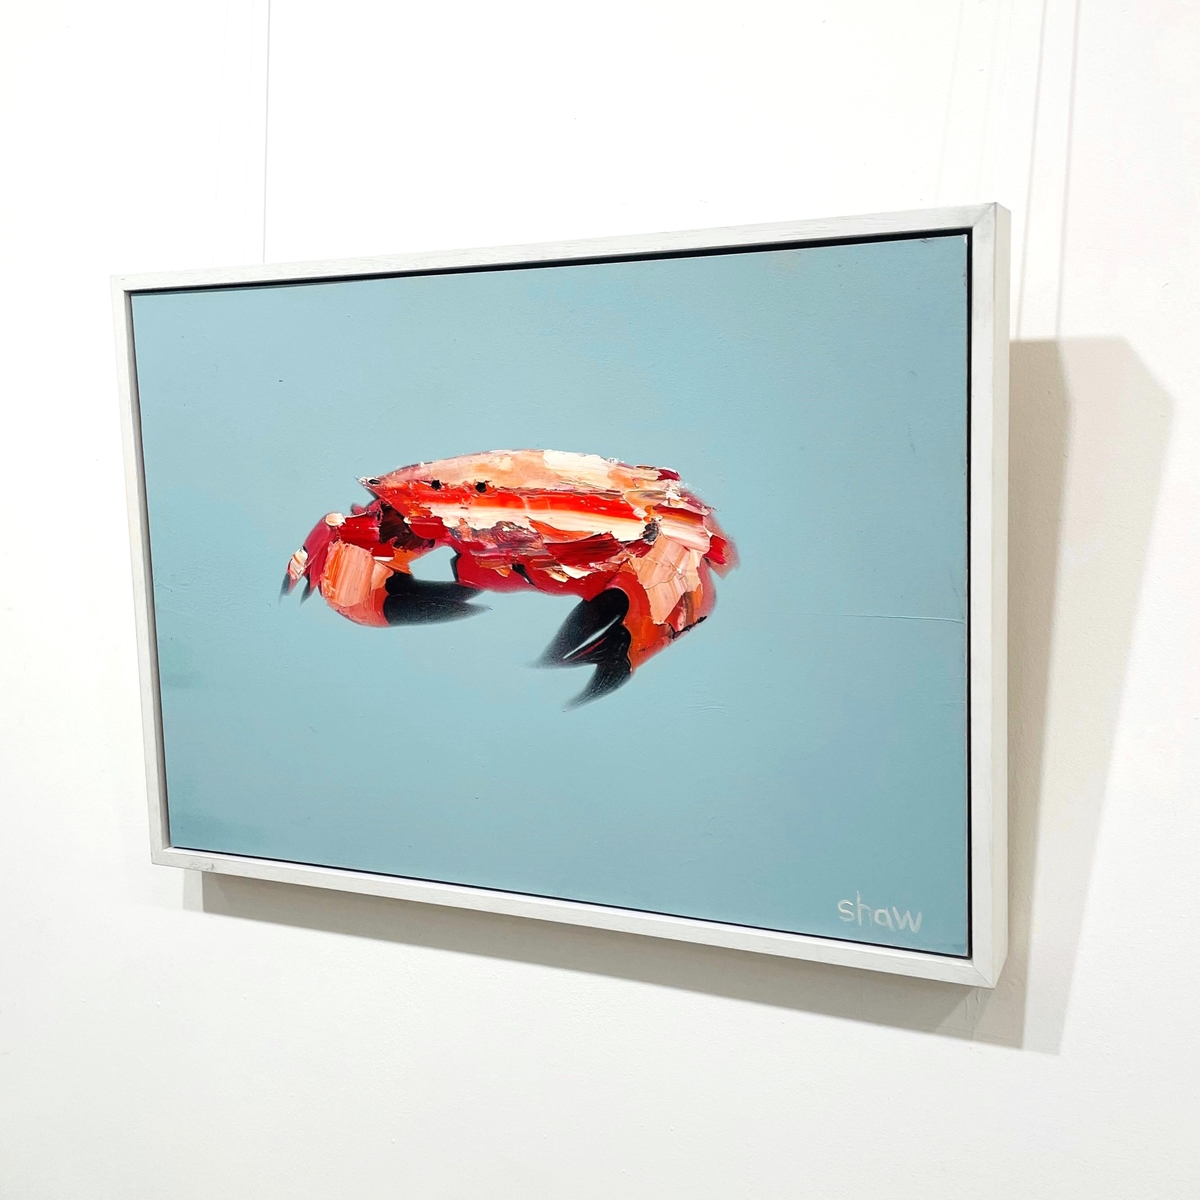 'Crab on Blue' by artist Rob Shaw